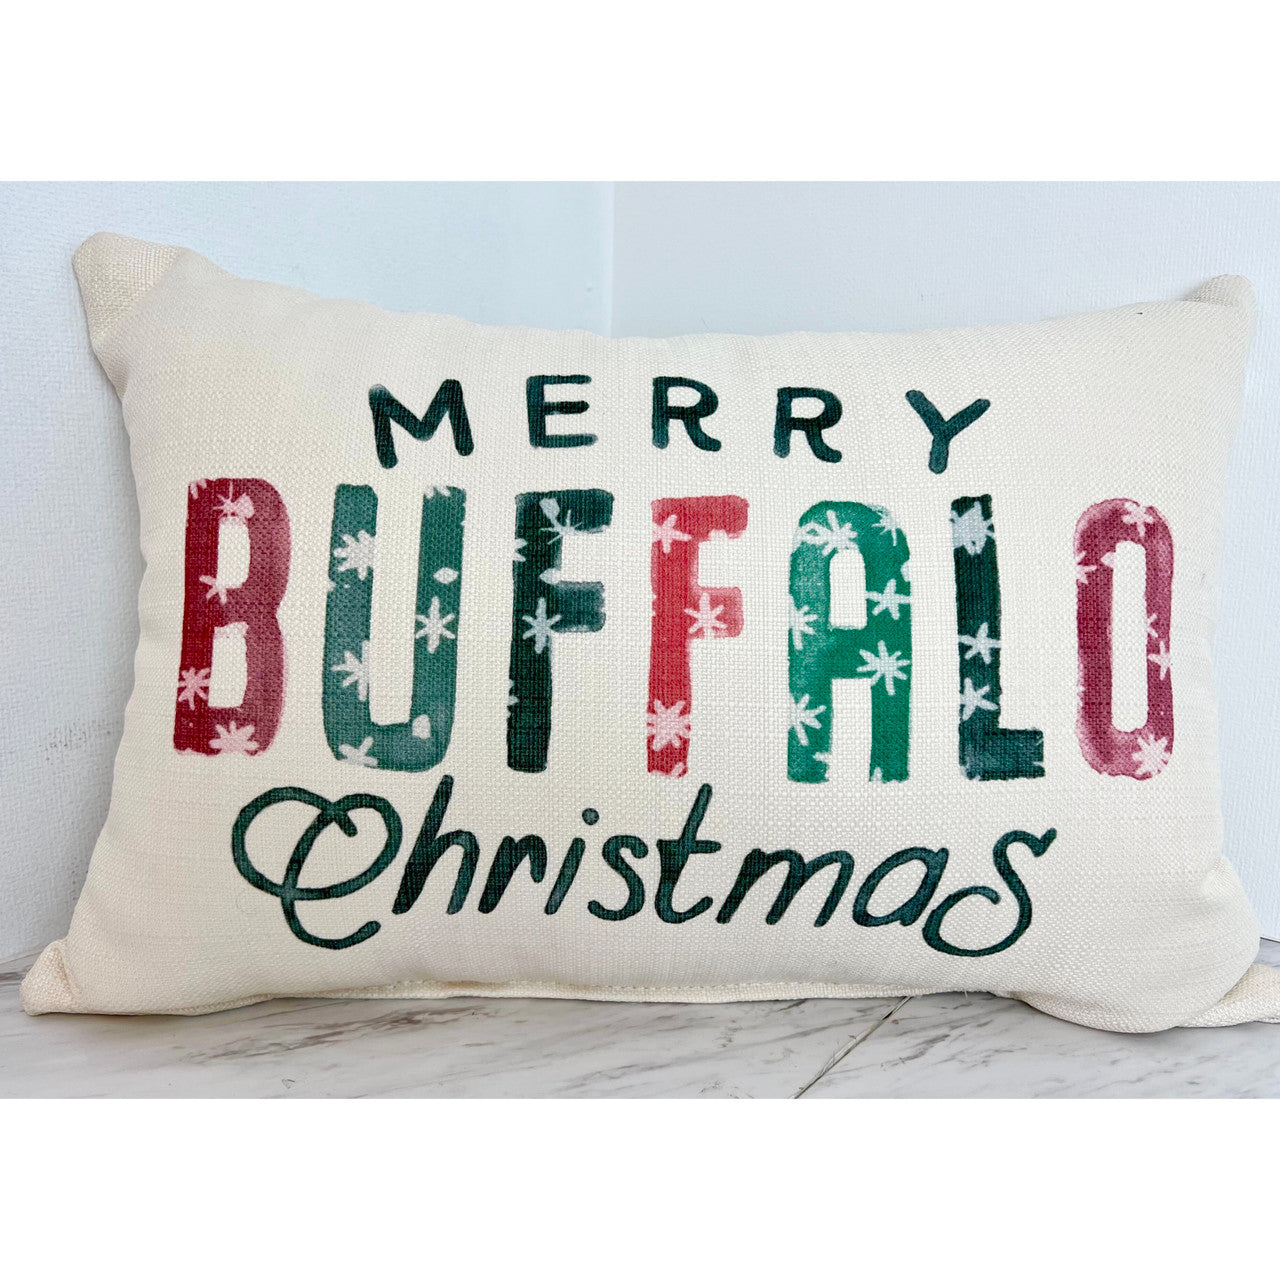 Merry Buffalo Christmas Pillow